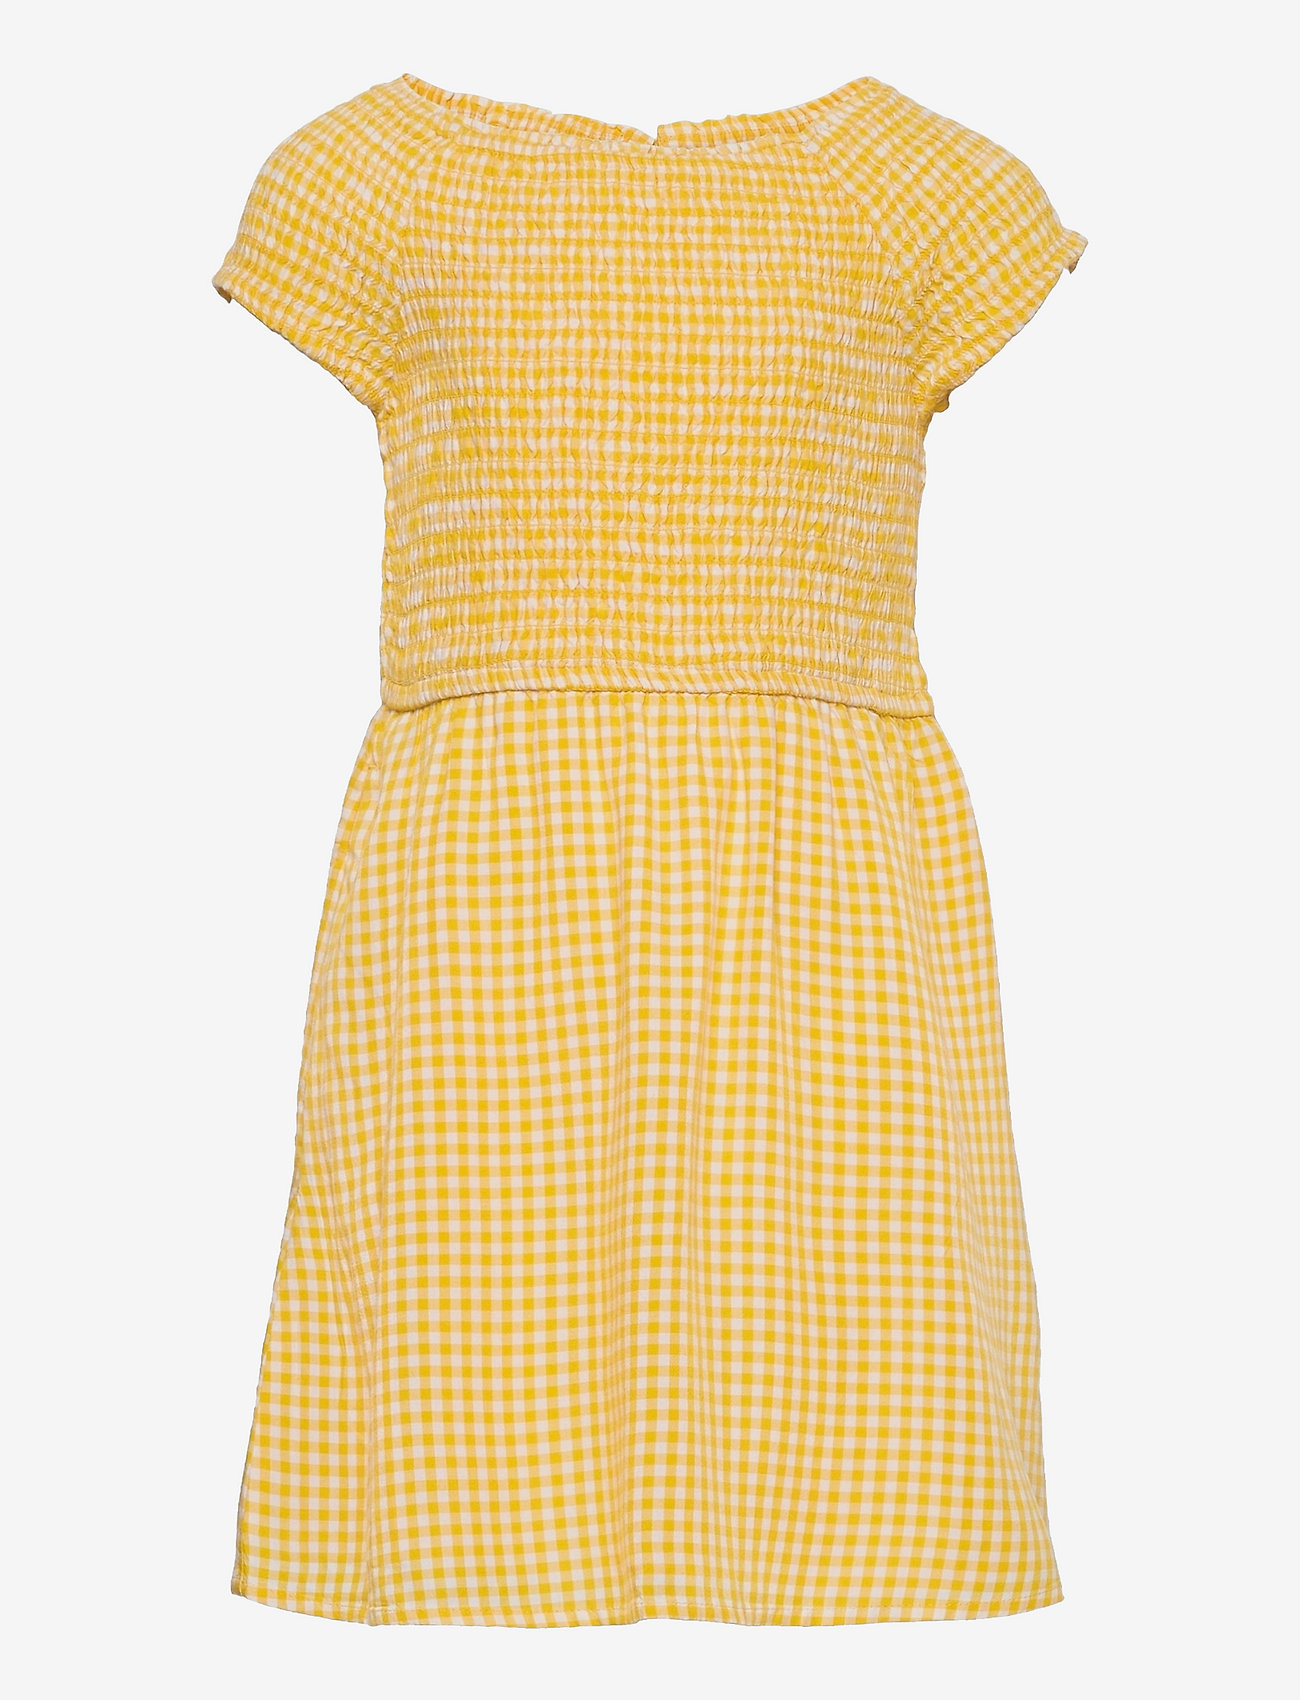 Abercrombie & Fitch - kids GIRLS DRESSES - kurzärmelige freizeitkleider - light yellow patt - 0